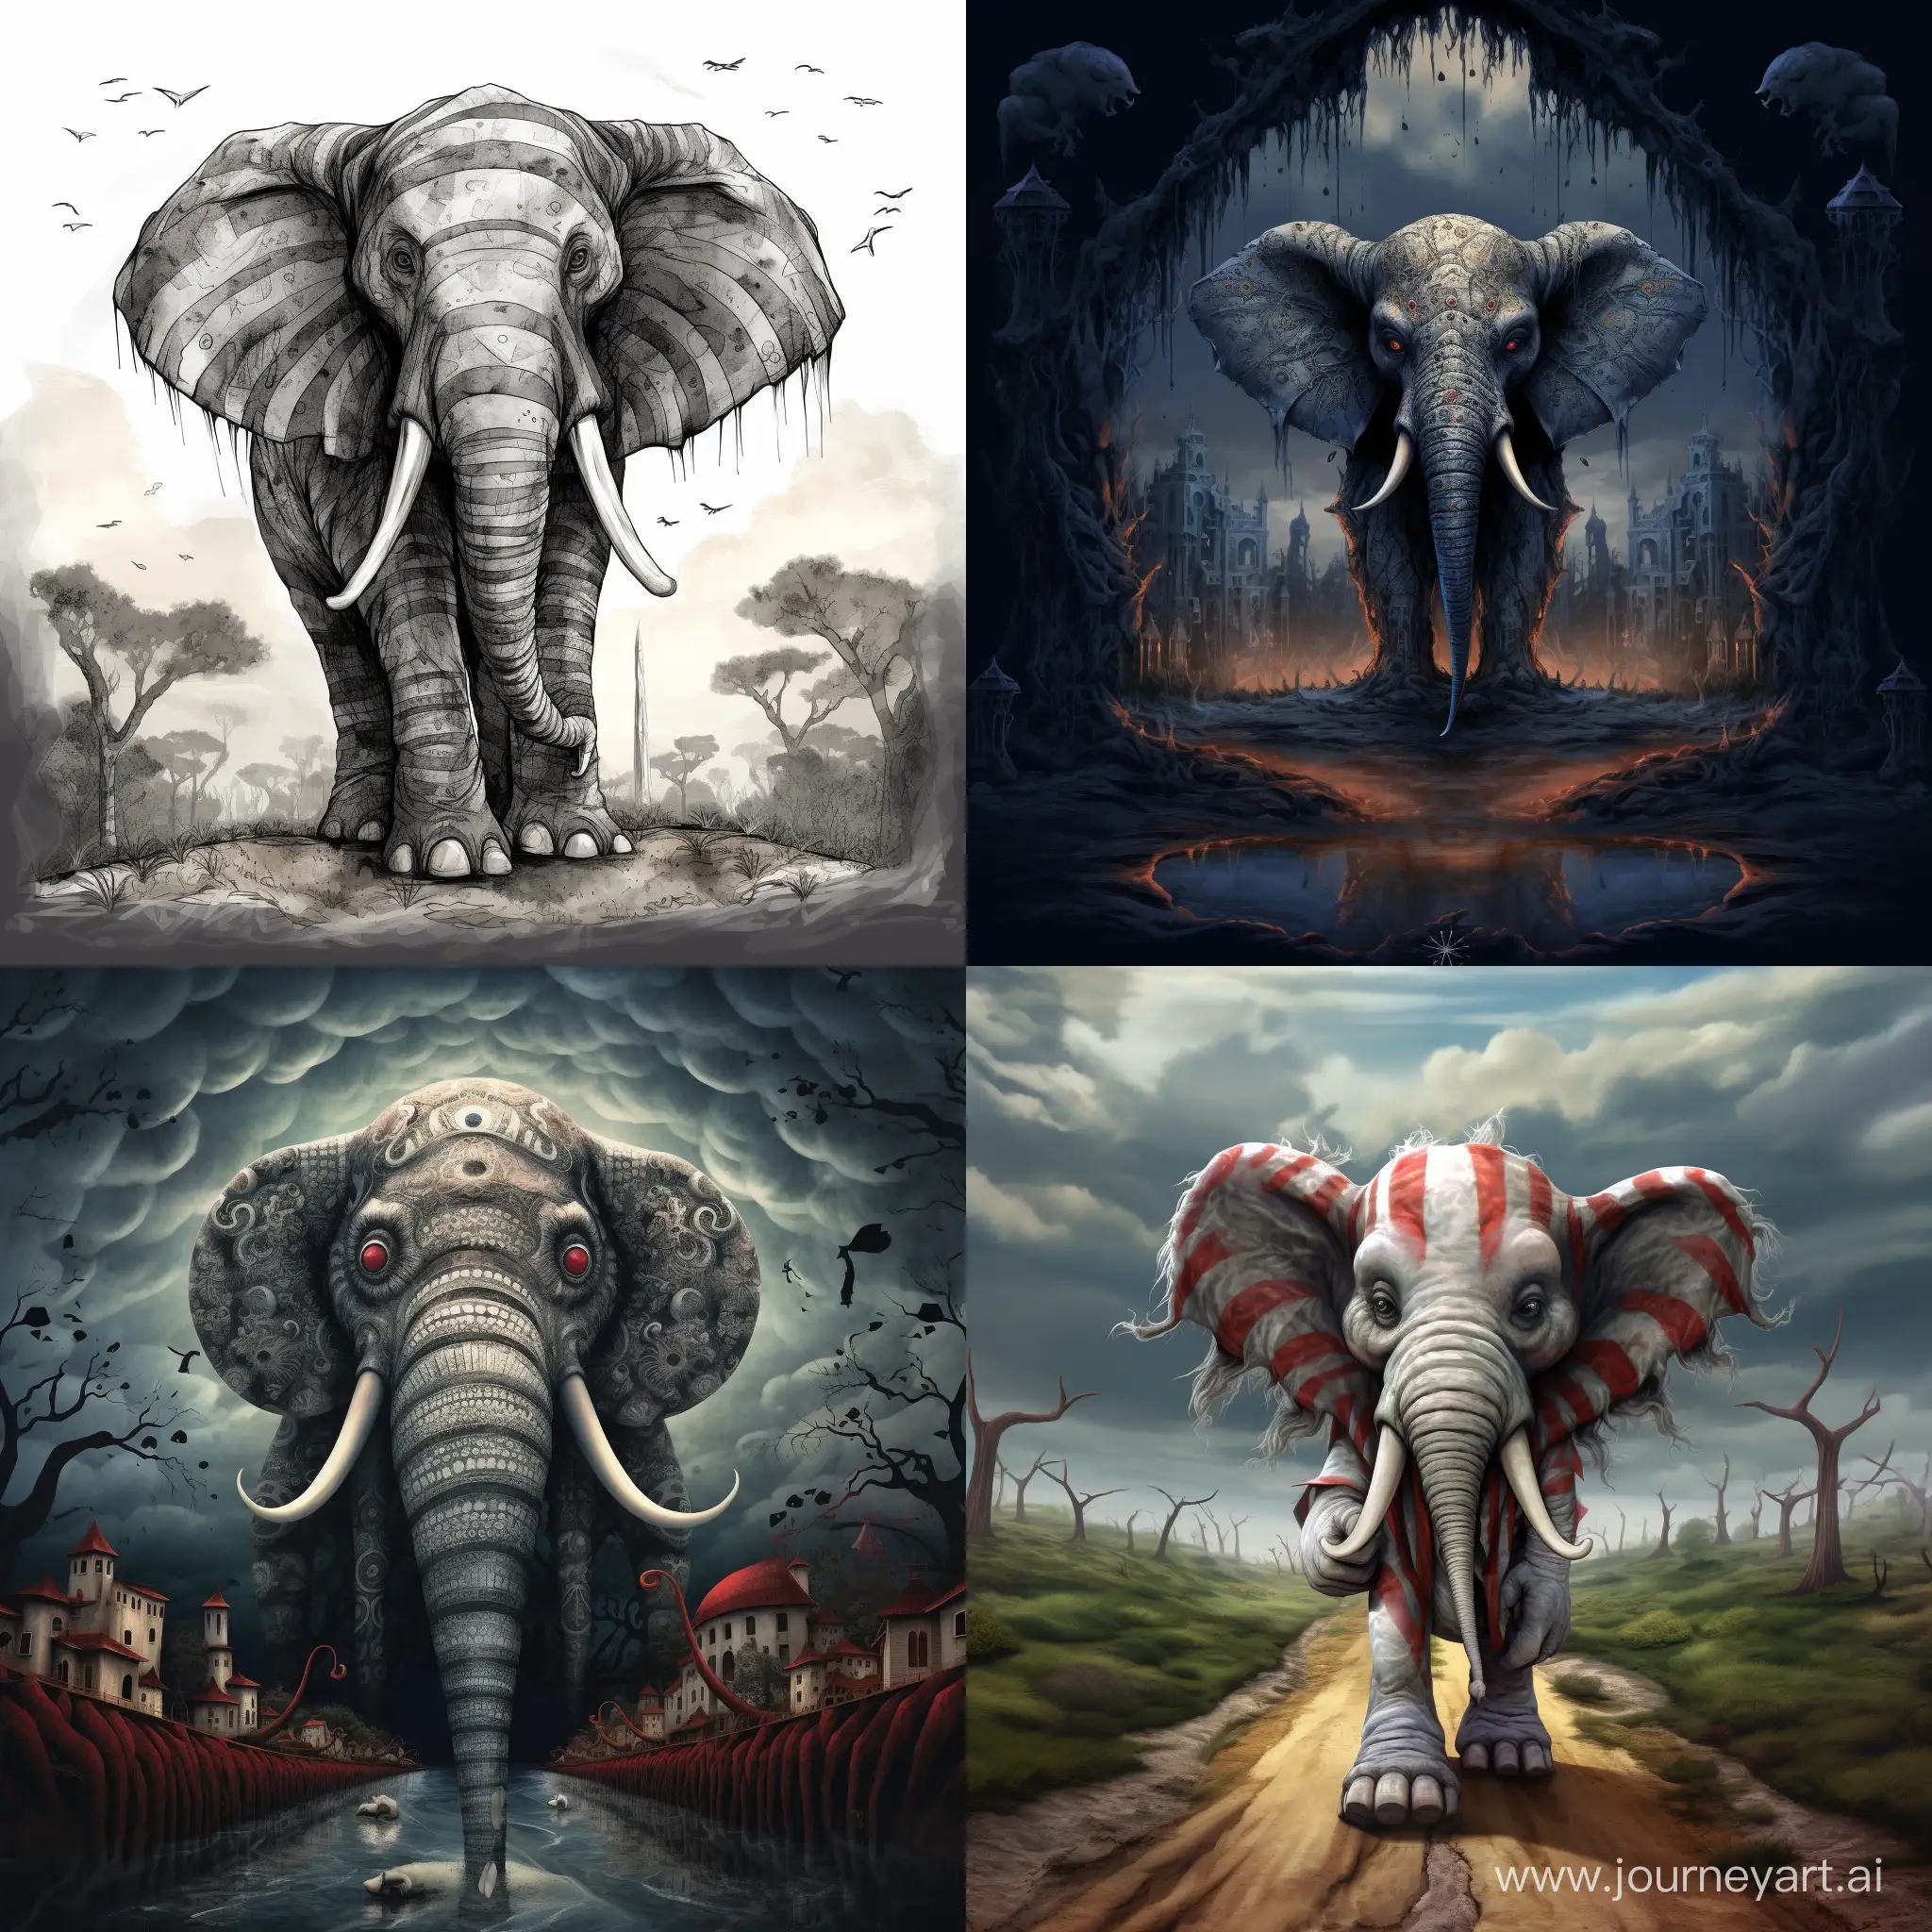 Tim-BurtonInspired-Elephant-Art-Whimsical-Dark-Fantasy-Elephant-in-11-Aspect-Ratio